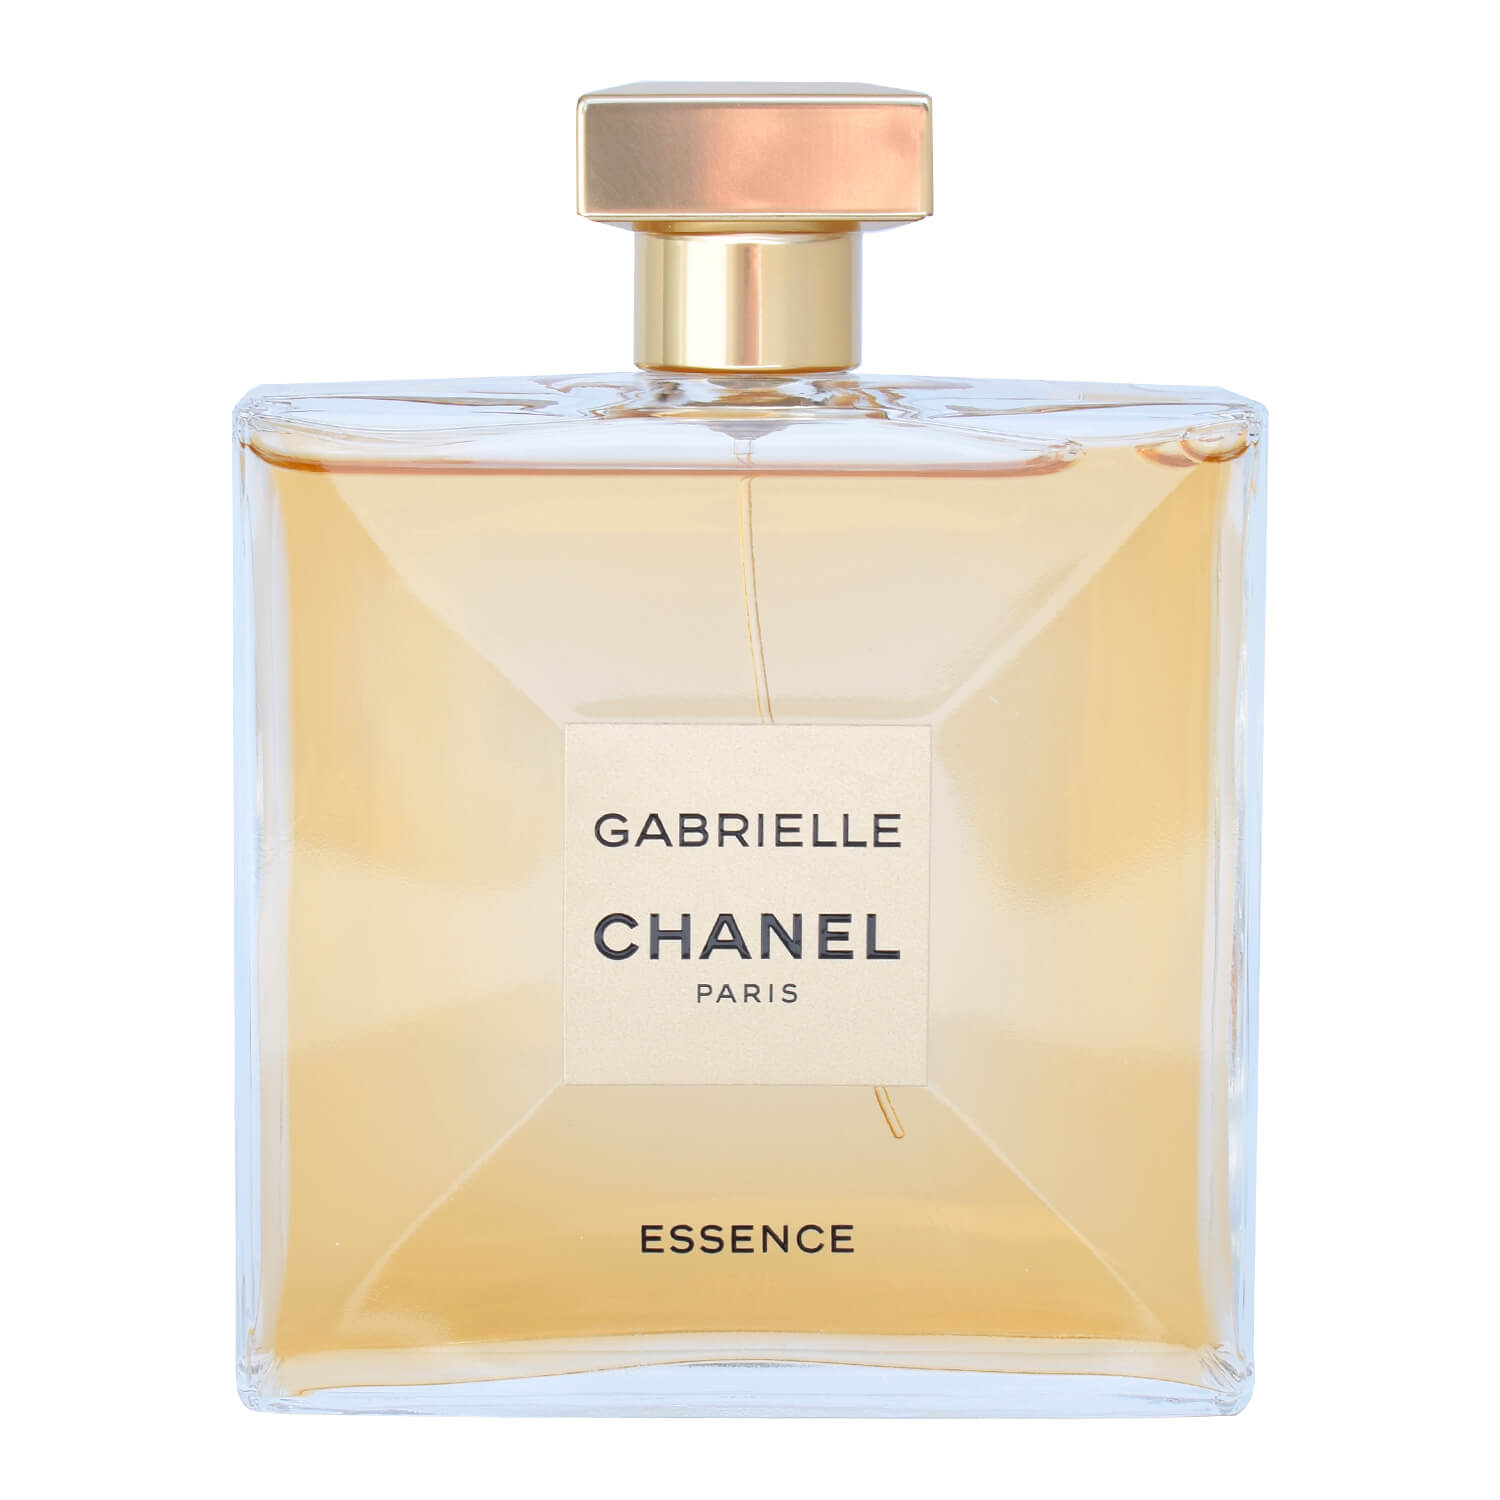 coromandel chanel perfume for men